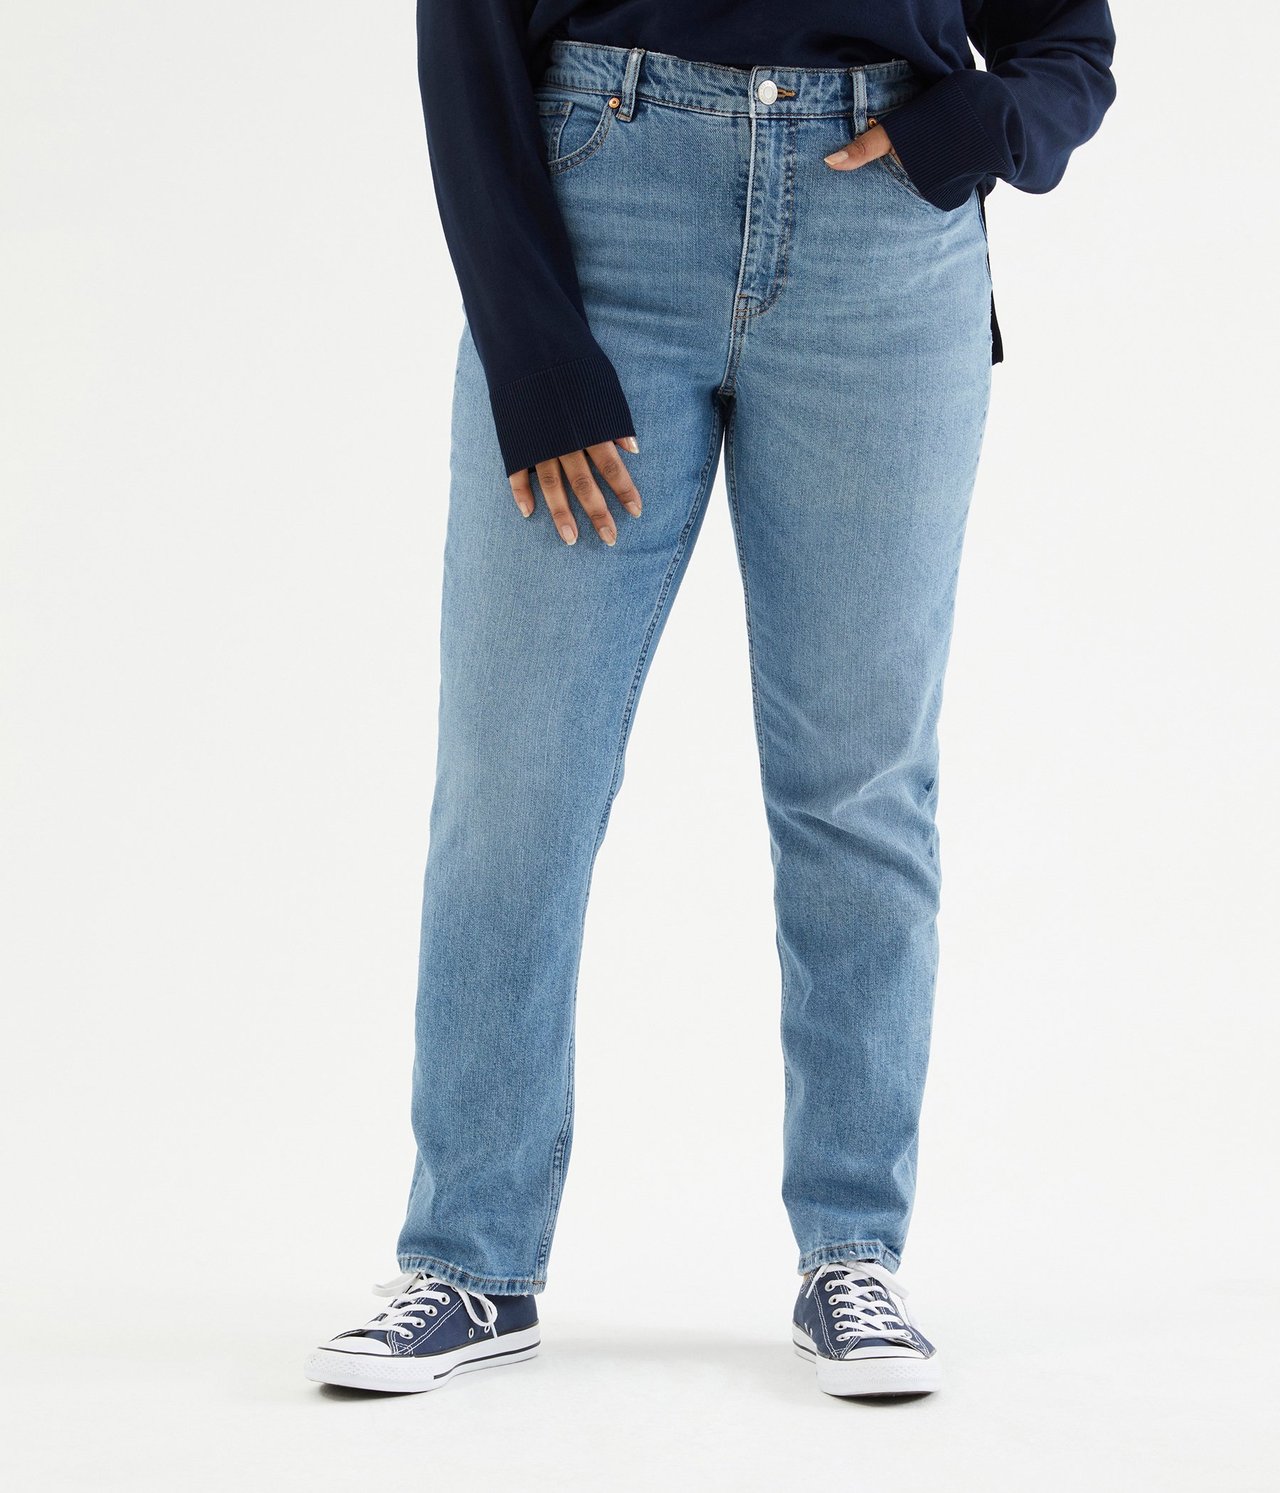 Jeans high waist tapered Lys denim - null - 6